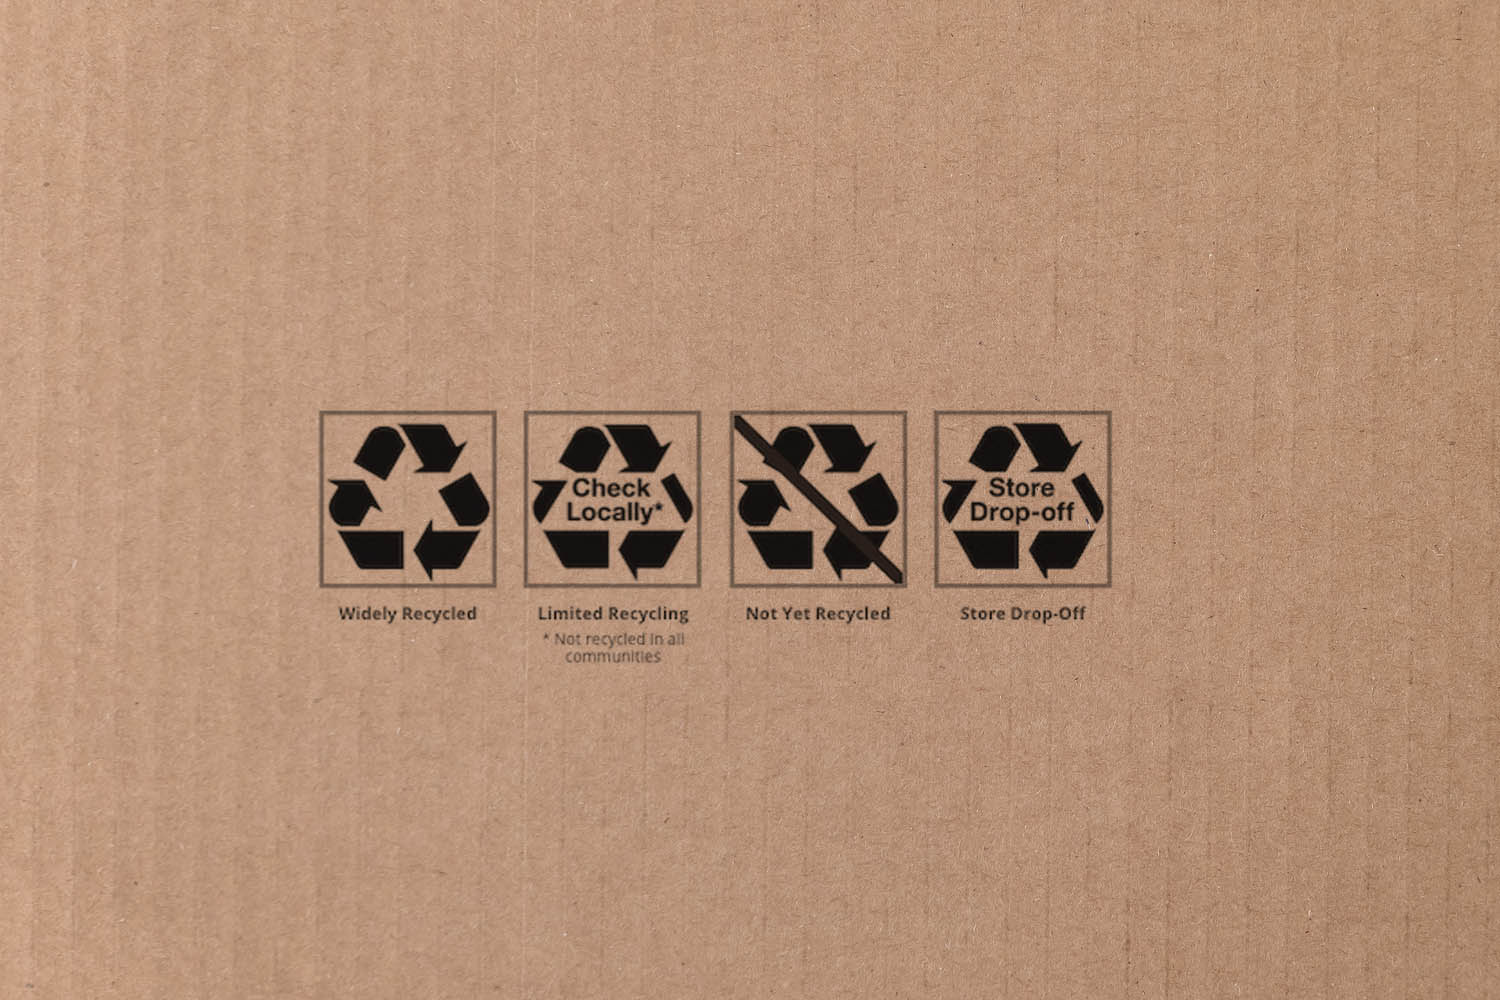 Recycling symbols on cardboard